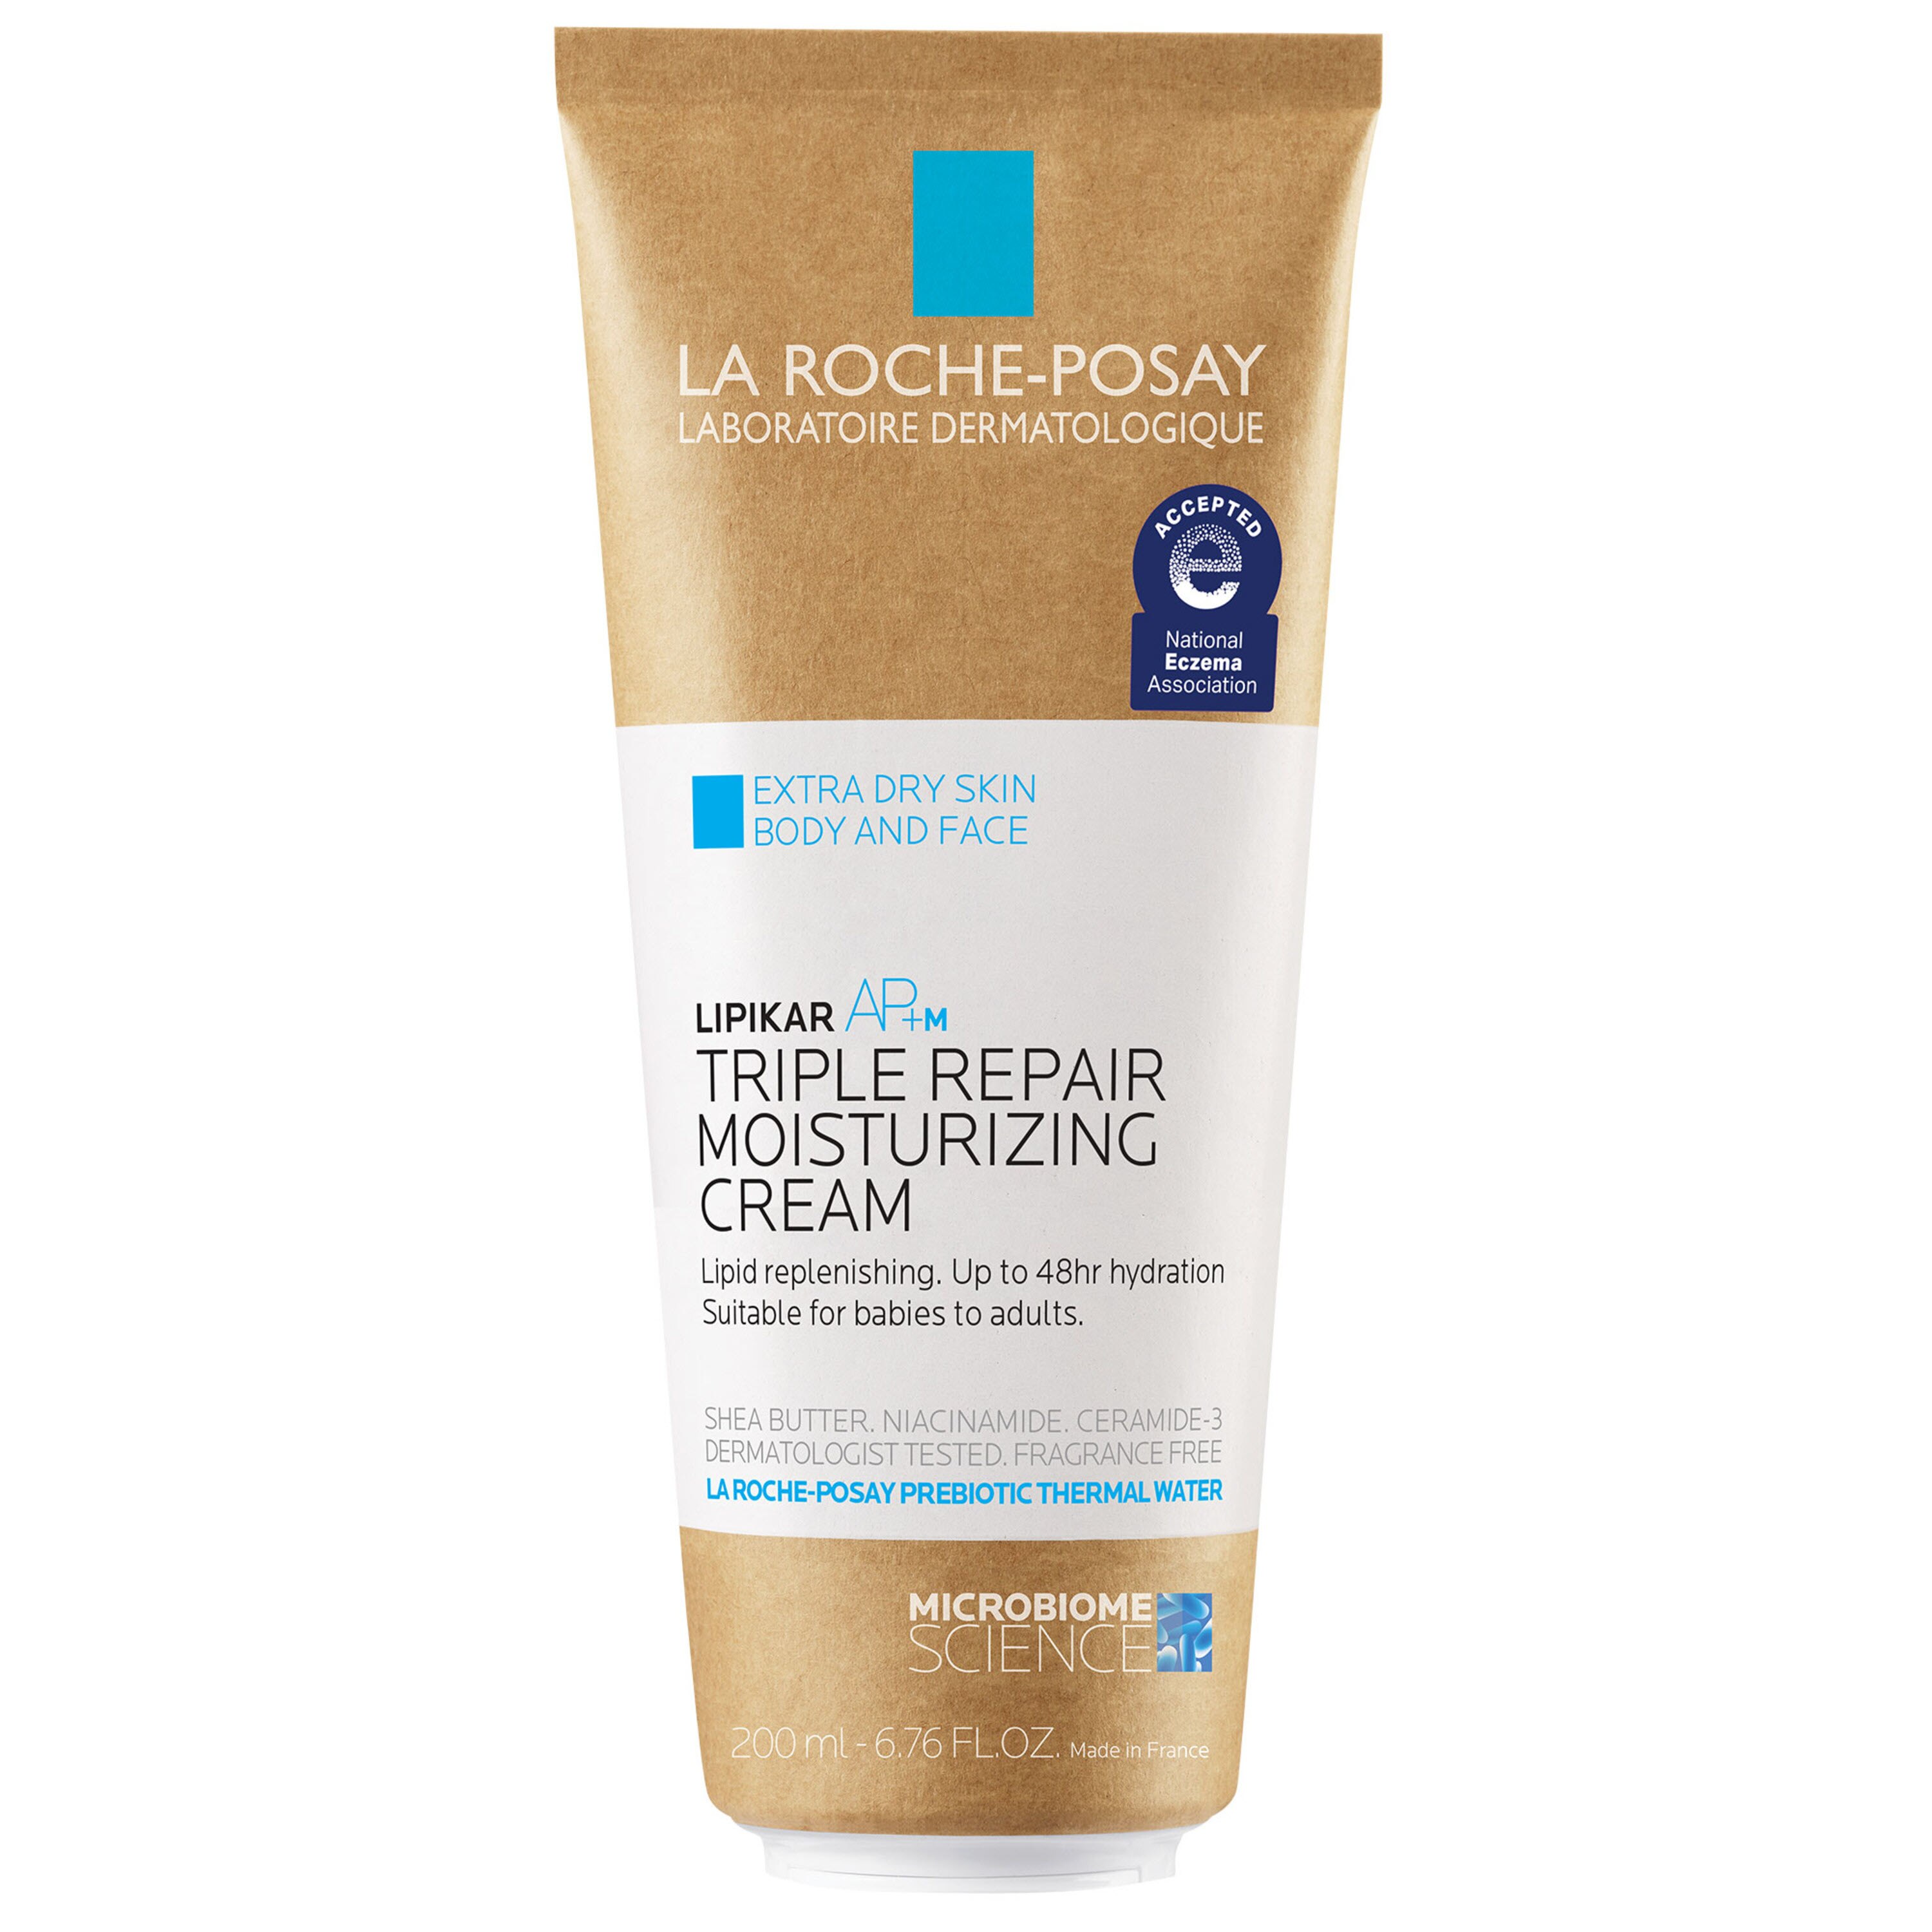 La Roche-Posay Body Moisturizer, Lipikar AP+M Triple Repair Body Moisturizing Cream for Dry Skin with Niacinamide - CVS Pharmacy